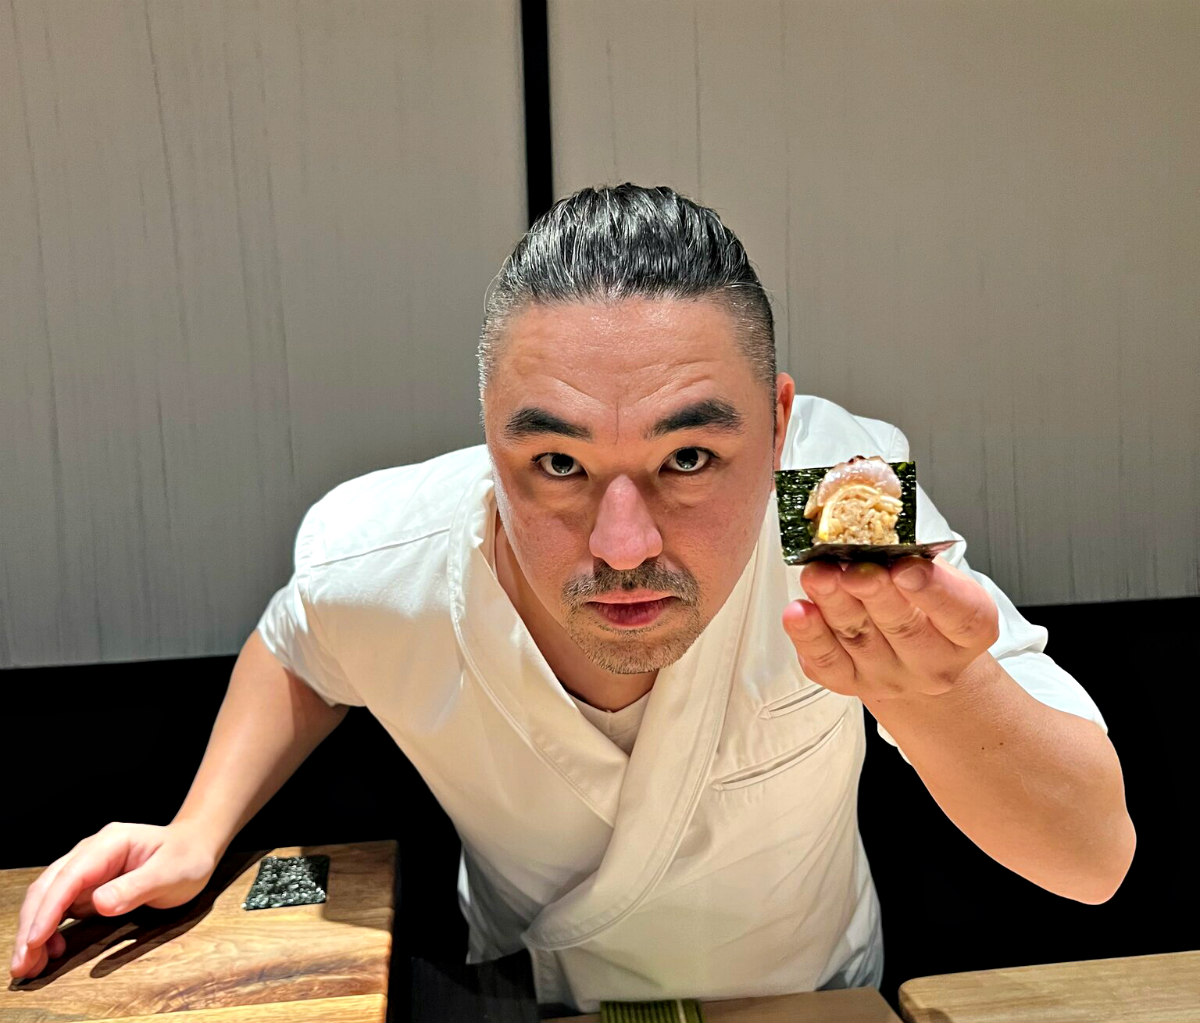 https://sarahbakerhansen.com/wp-content/uploads/2023/03/Dave-and-Barracuda-Osaka-style-stick-sushi.jpg